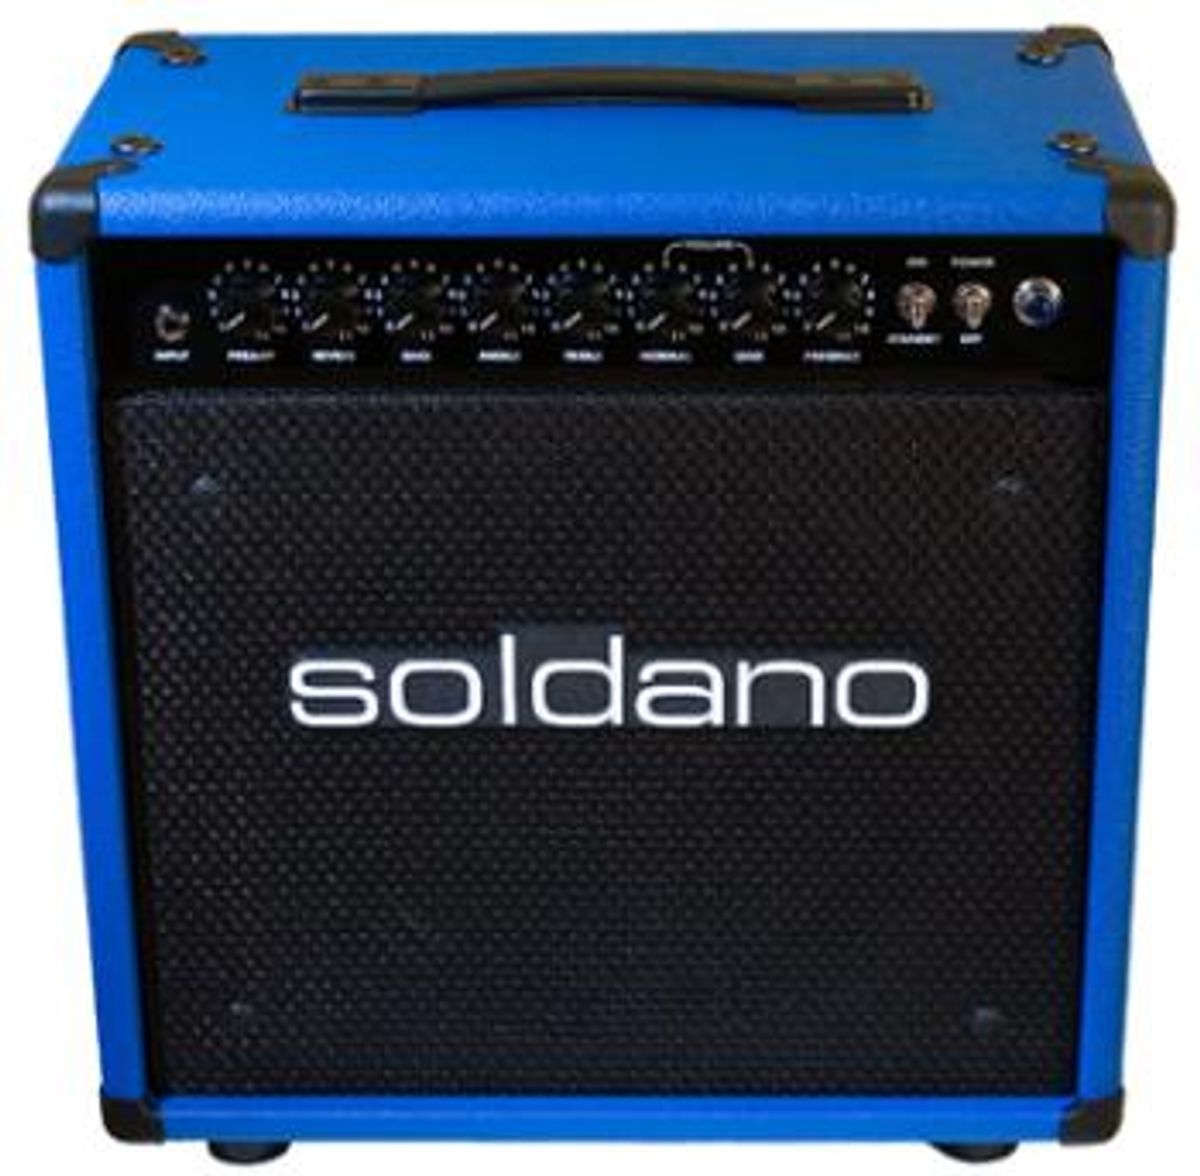 Review: Soldano 44 Blues City Music Signature Amp